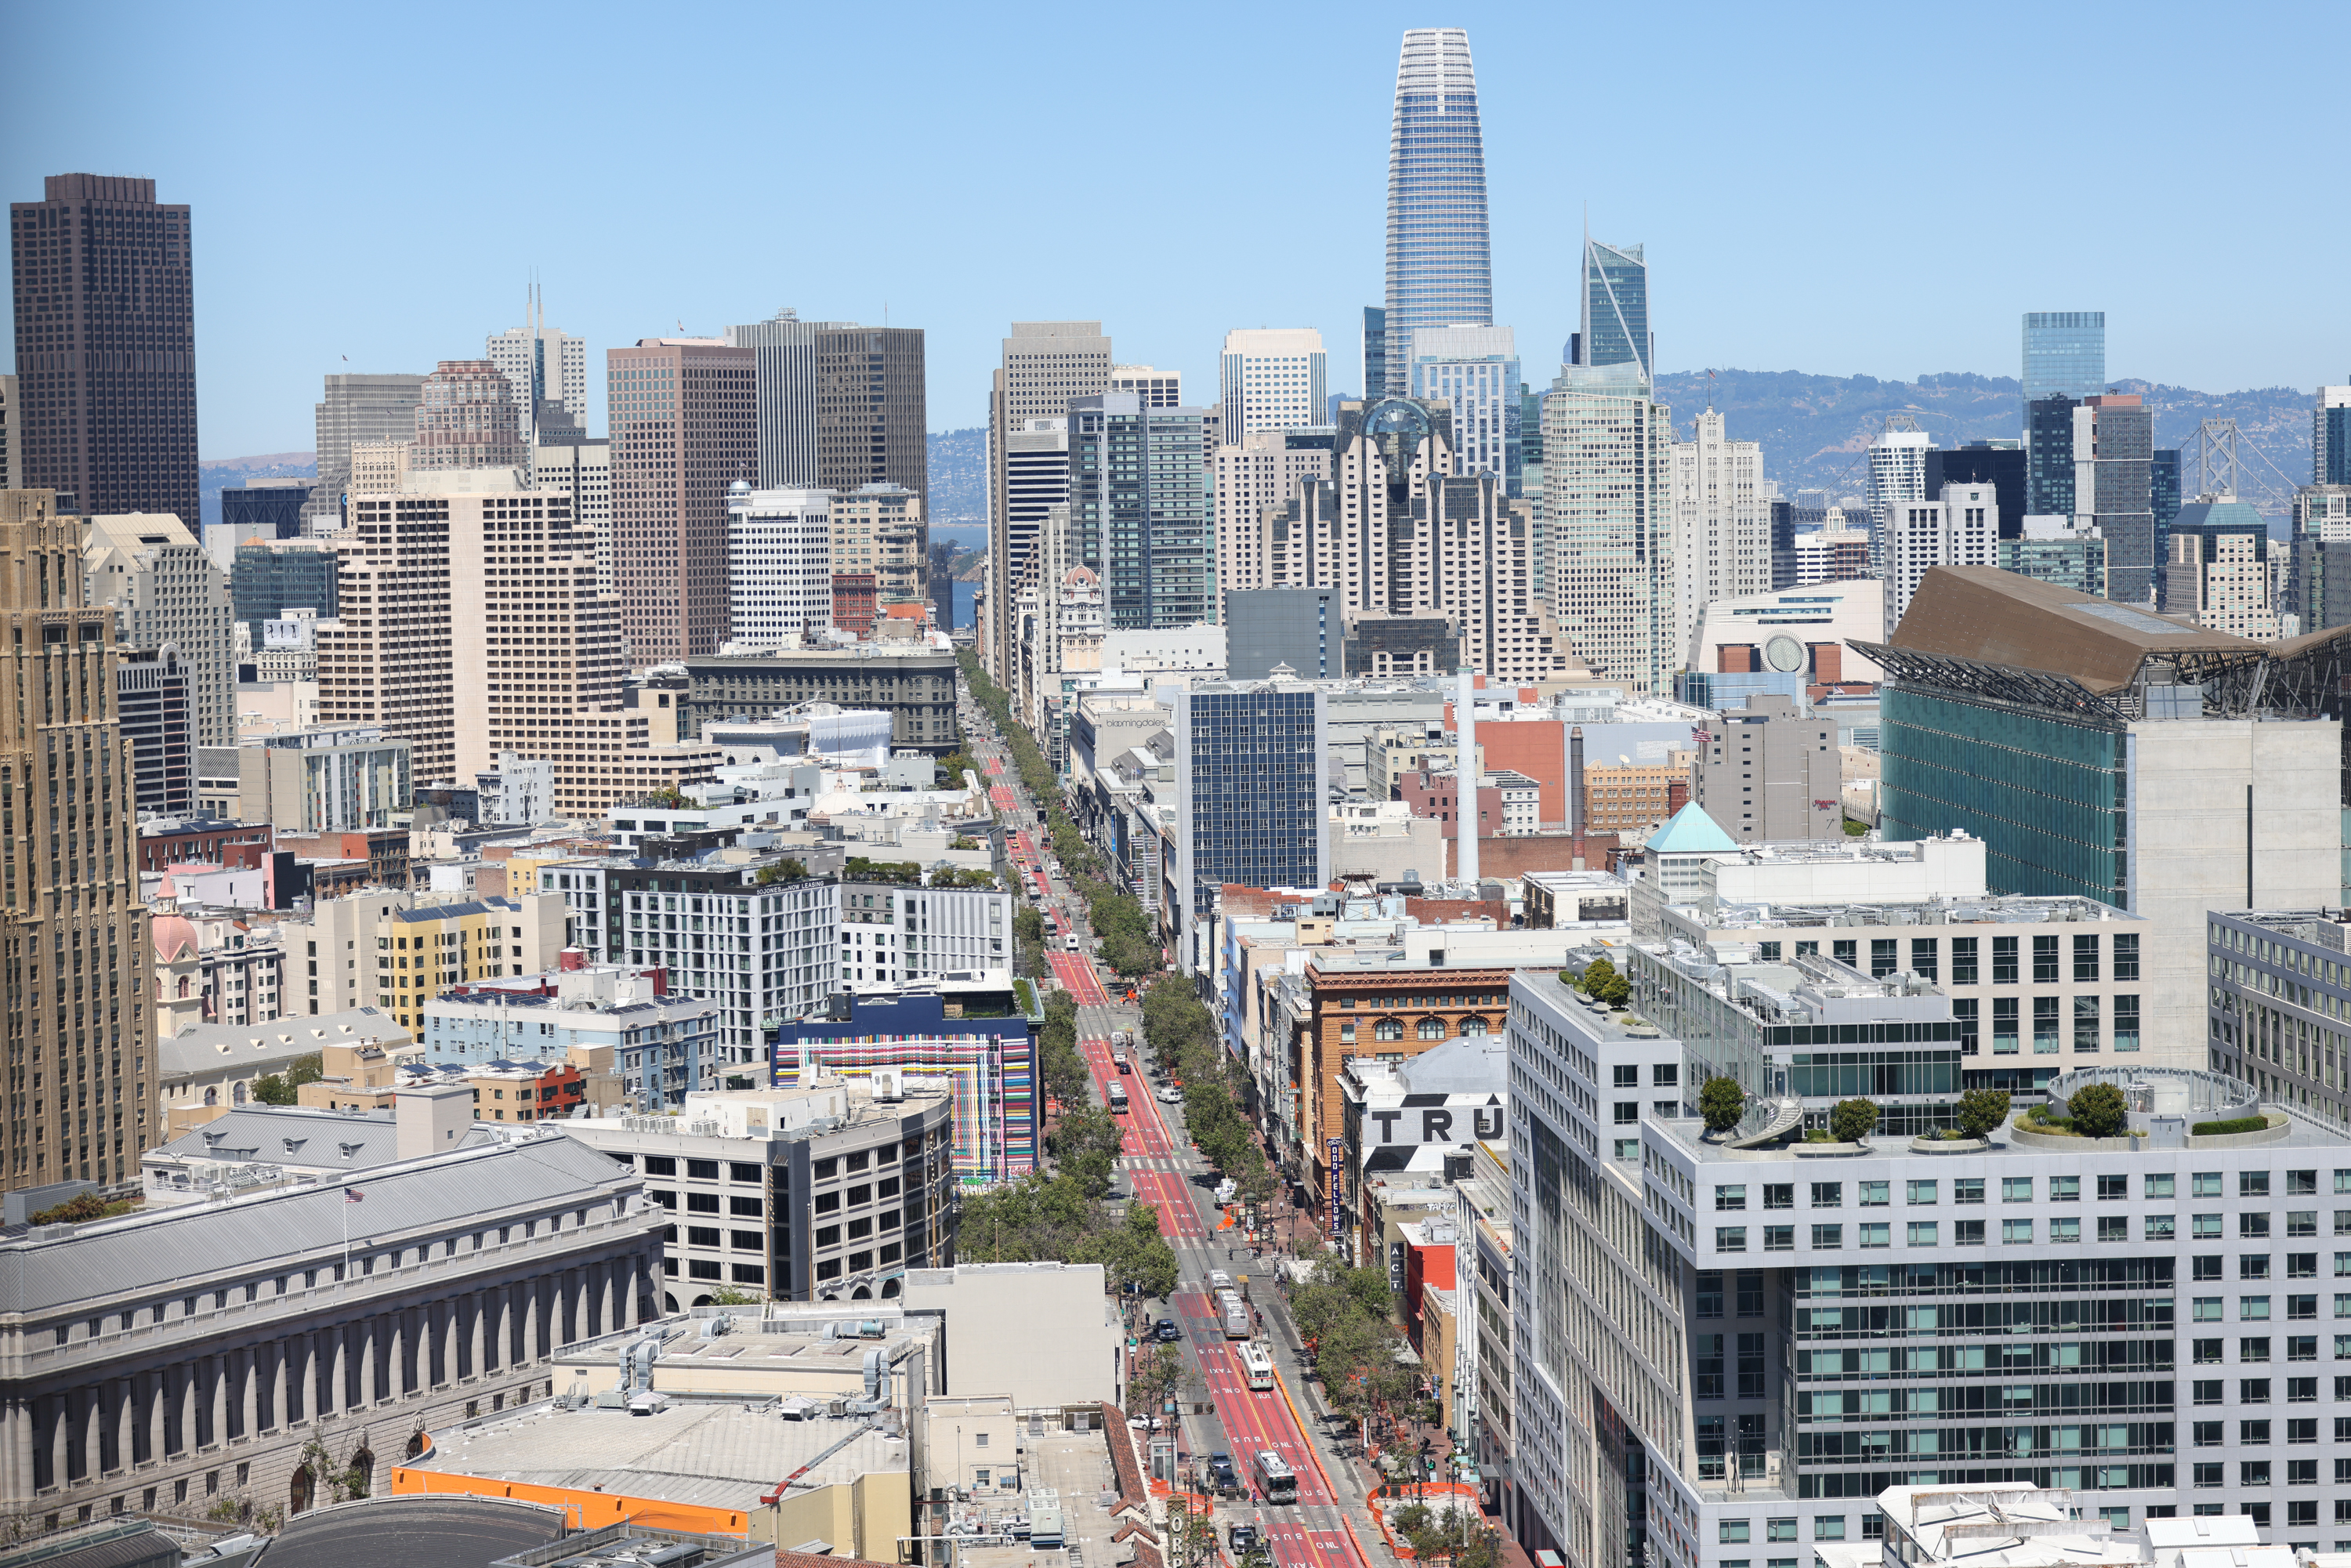 San Francisco Official Wants To Make Market Street a ‘Real Promenade’